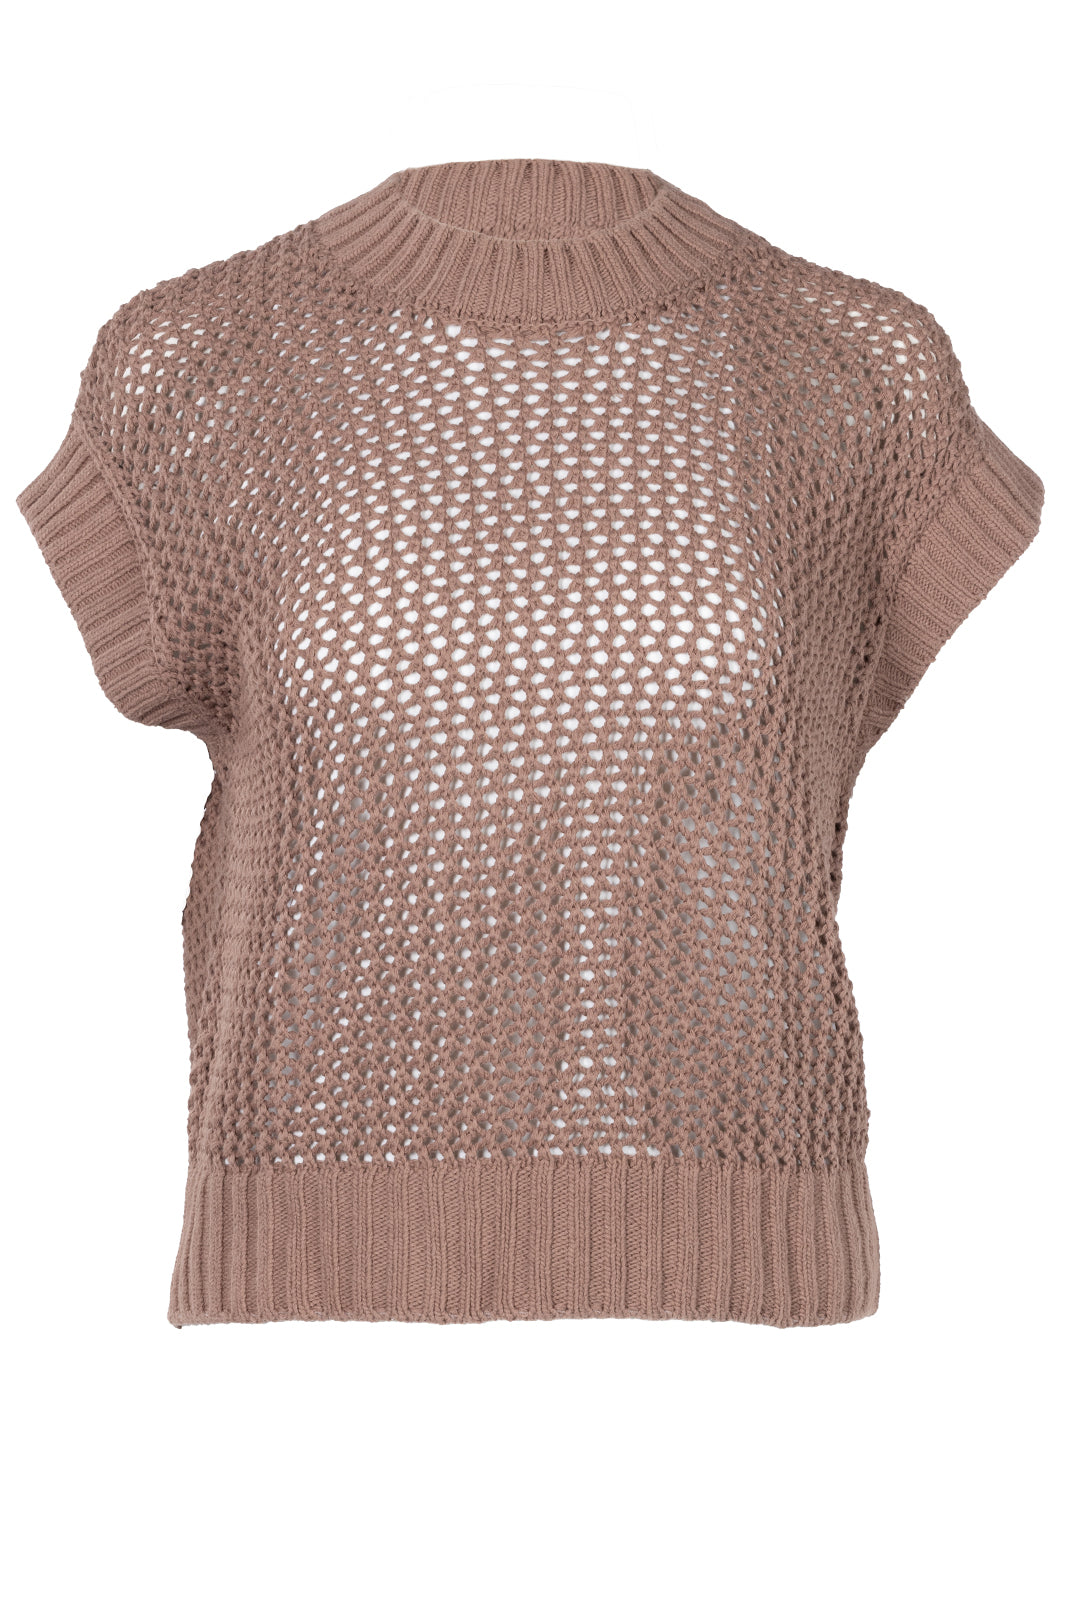 Short brown knit tank top | Malibu